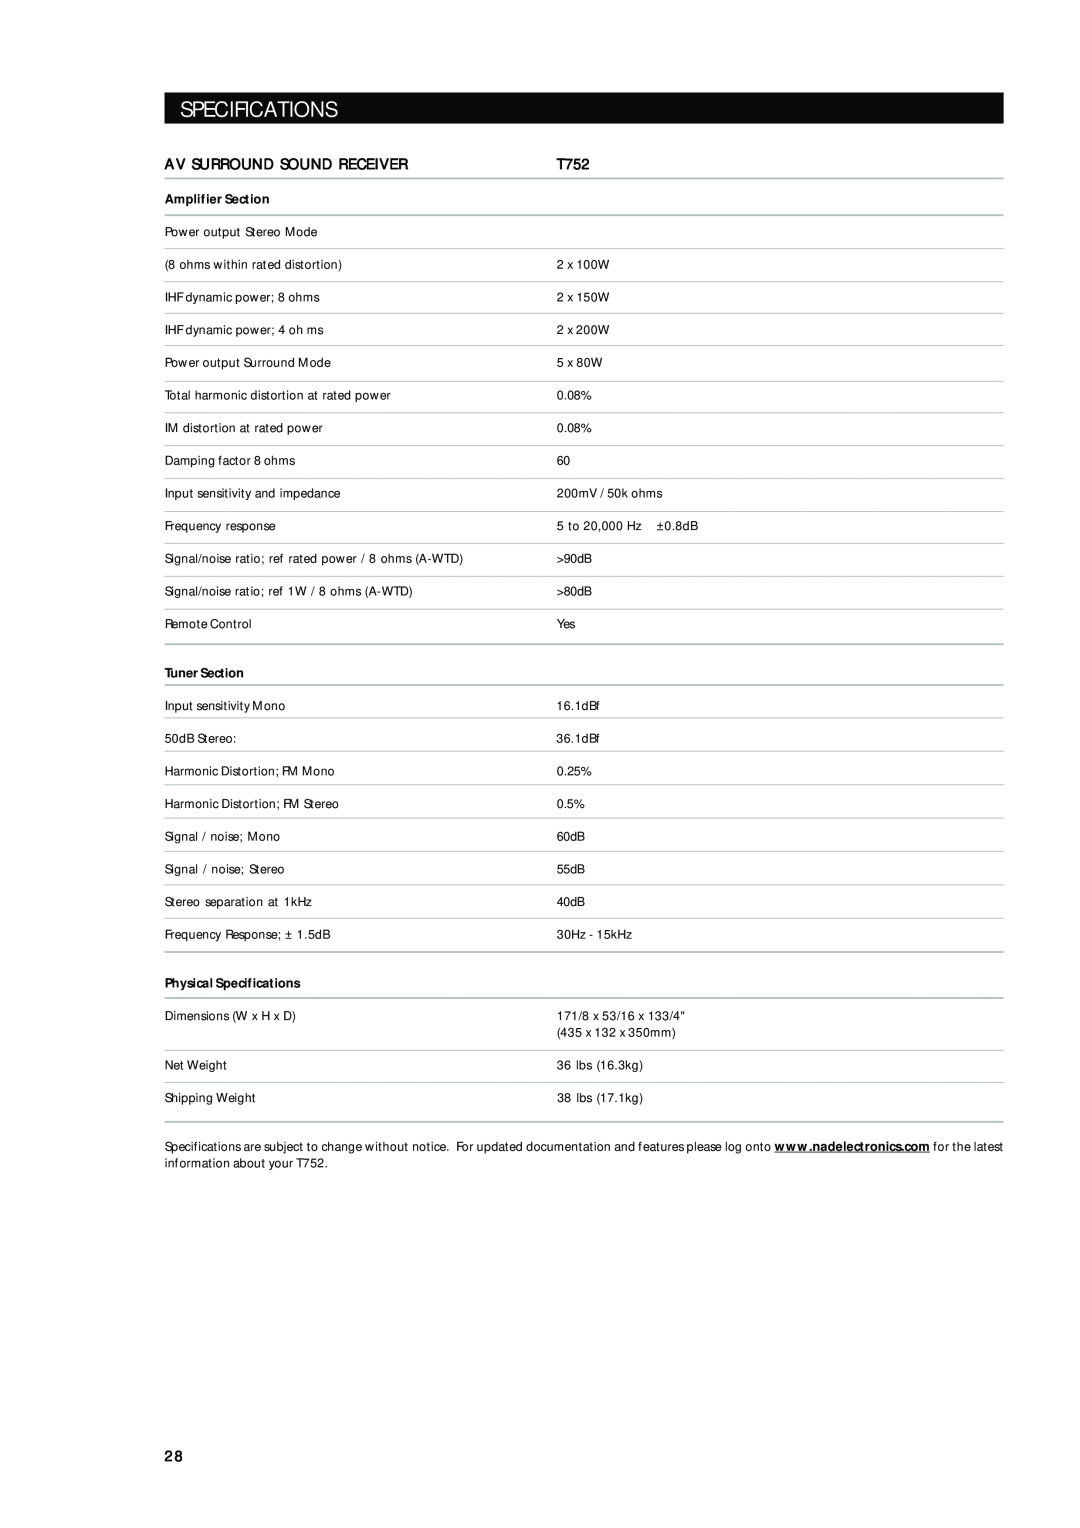 Integra T752 owner manual Specifications, Av Surround Sound Receiver 